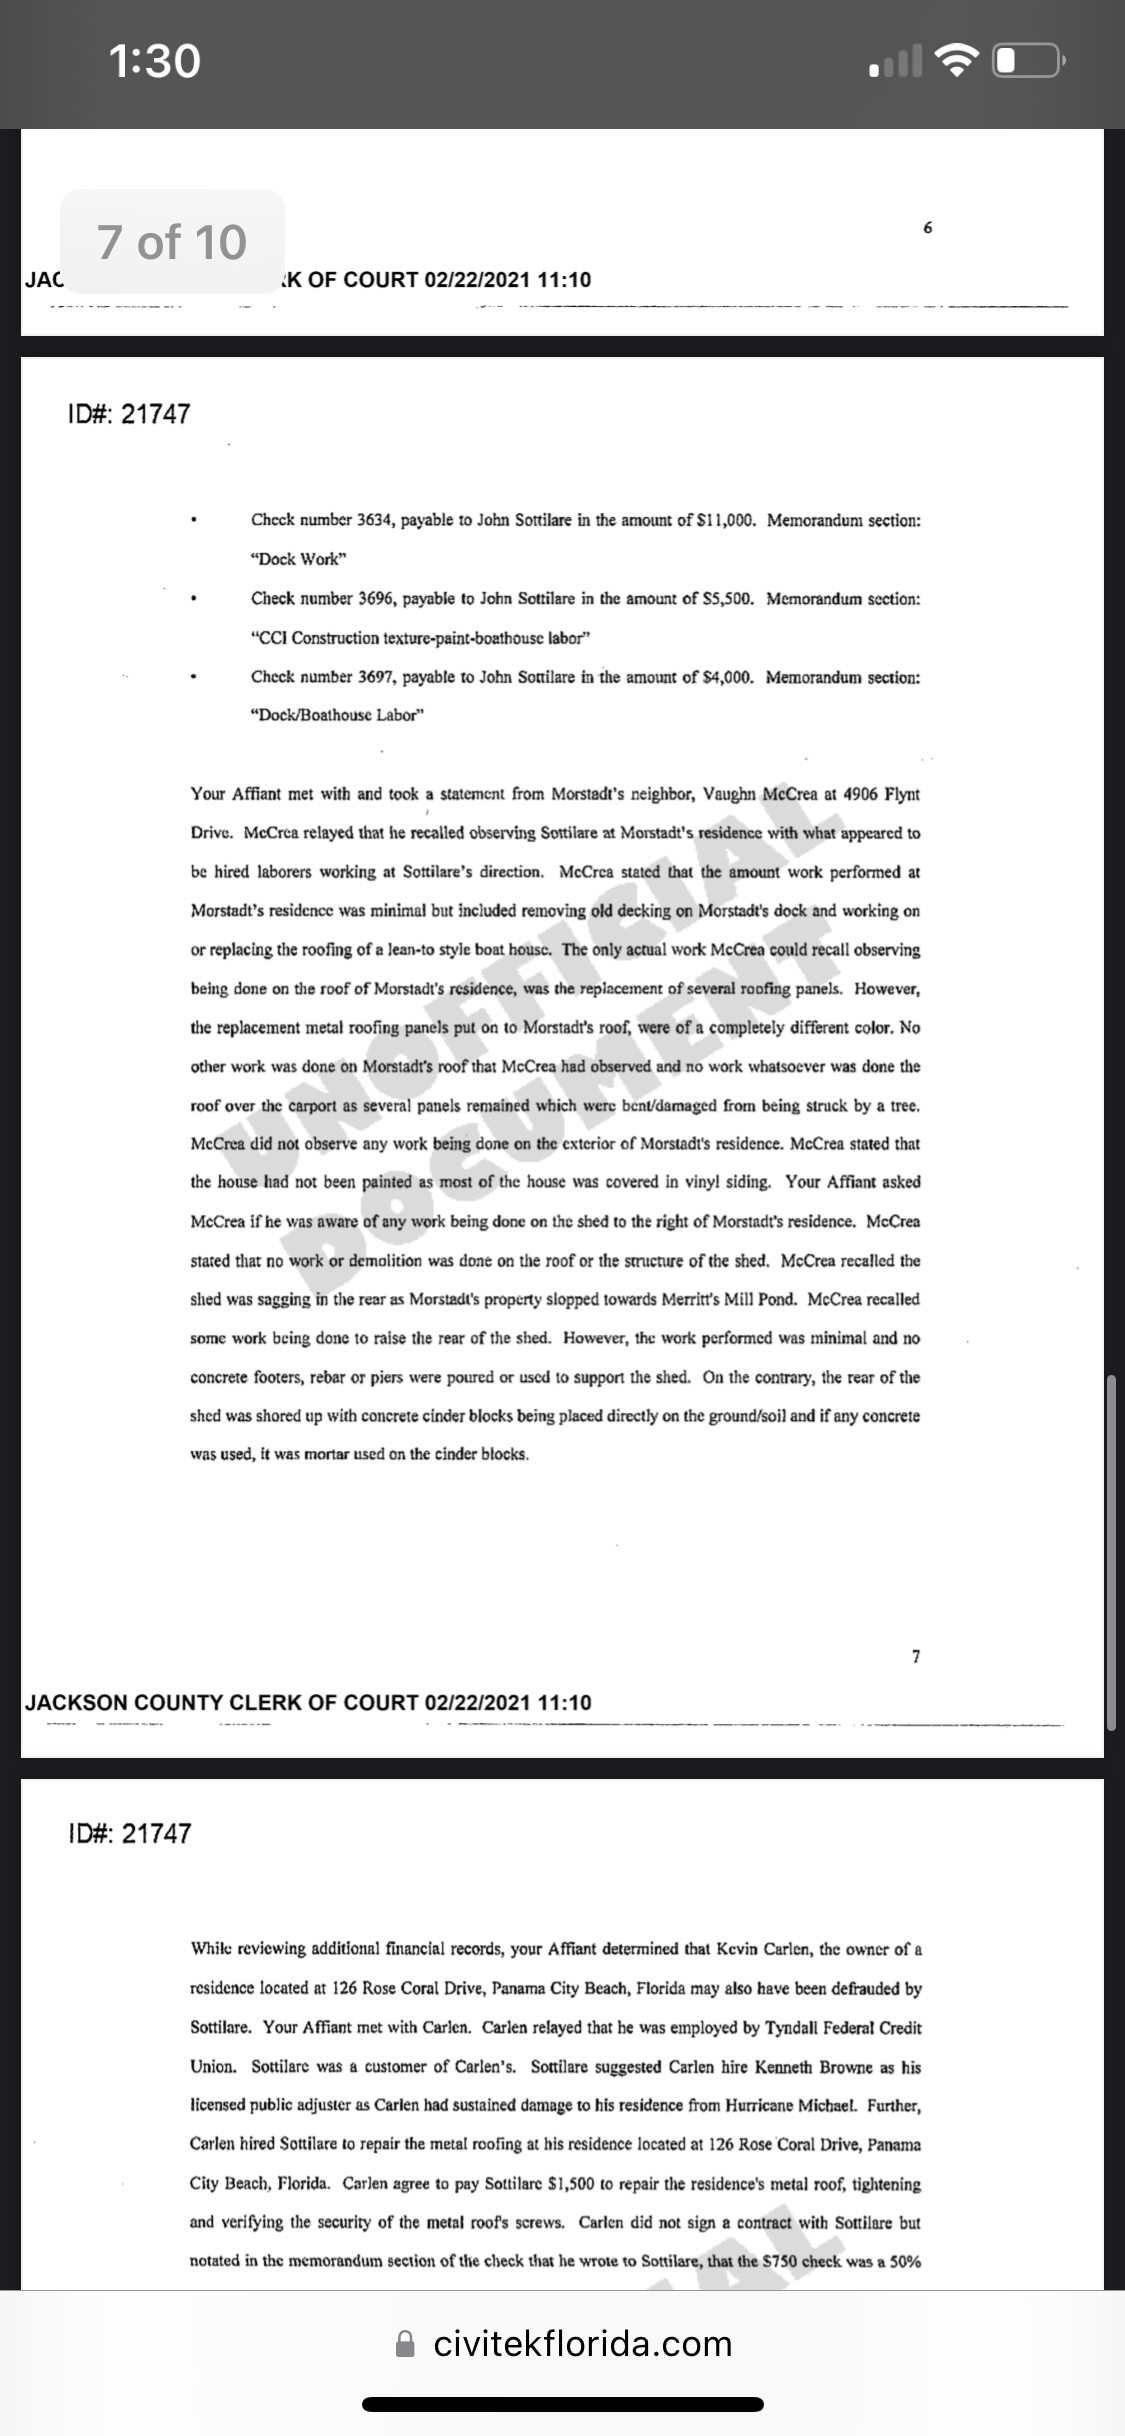 Page 7 felony Kenneth Browne